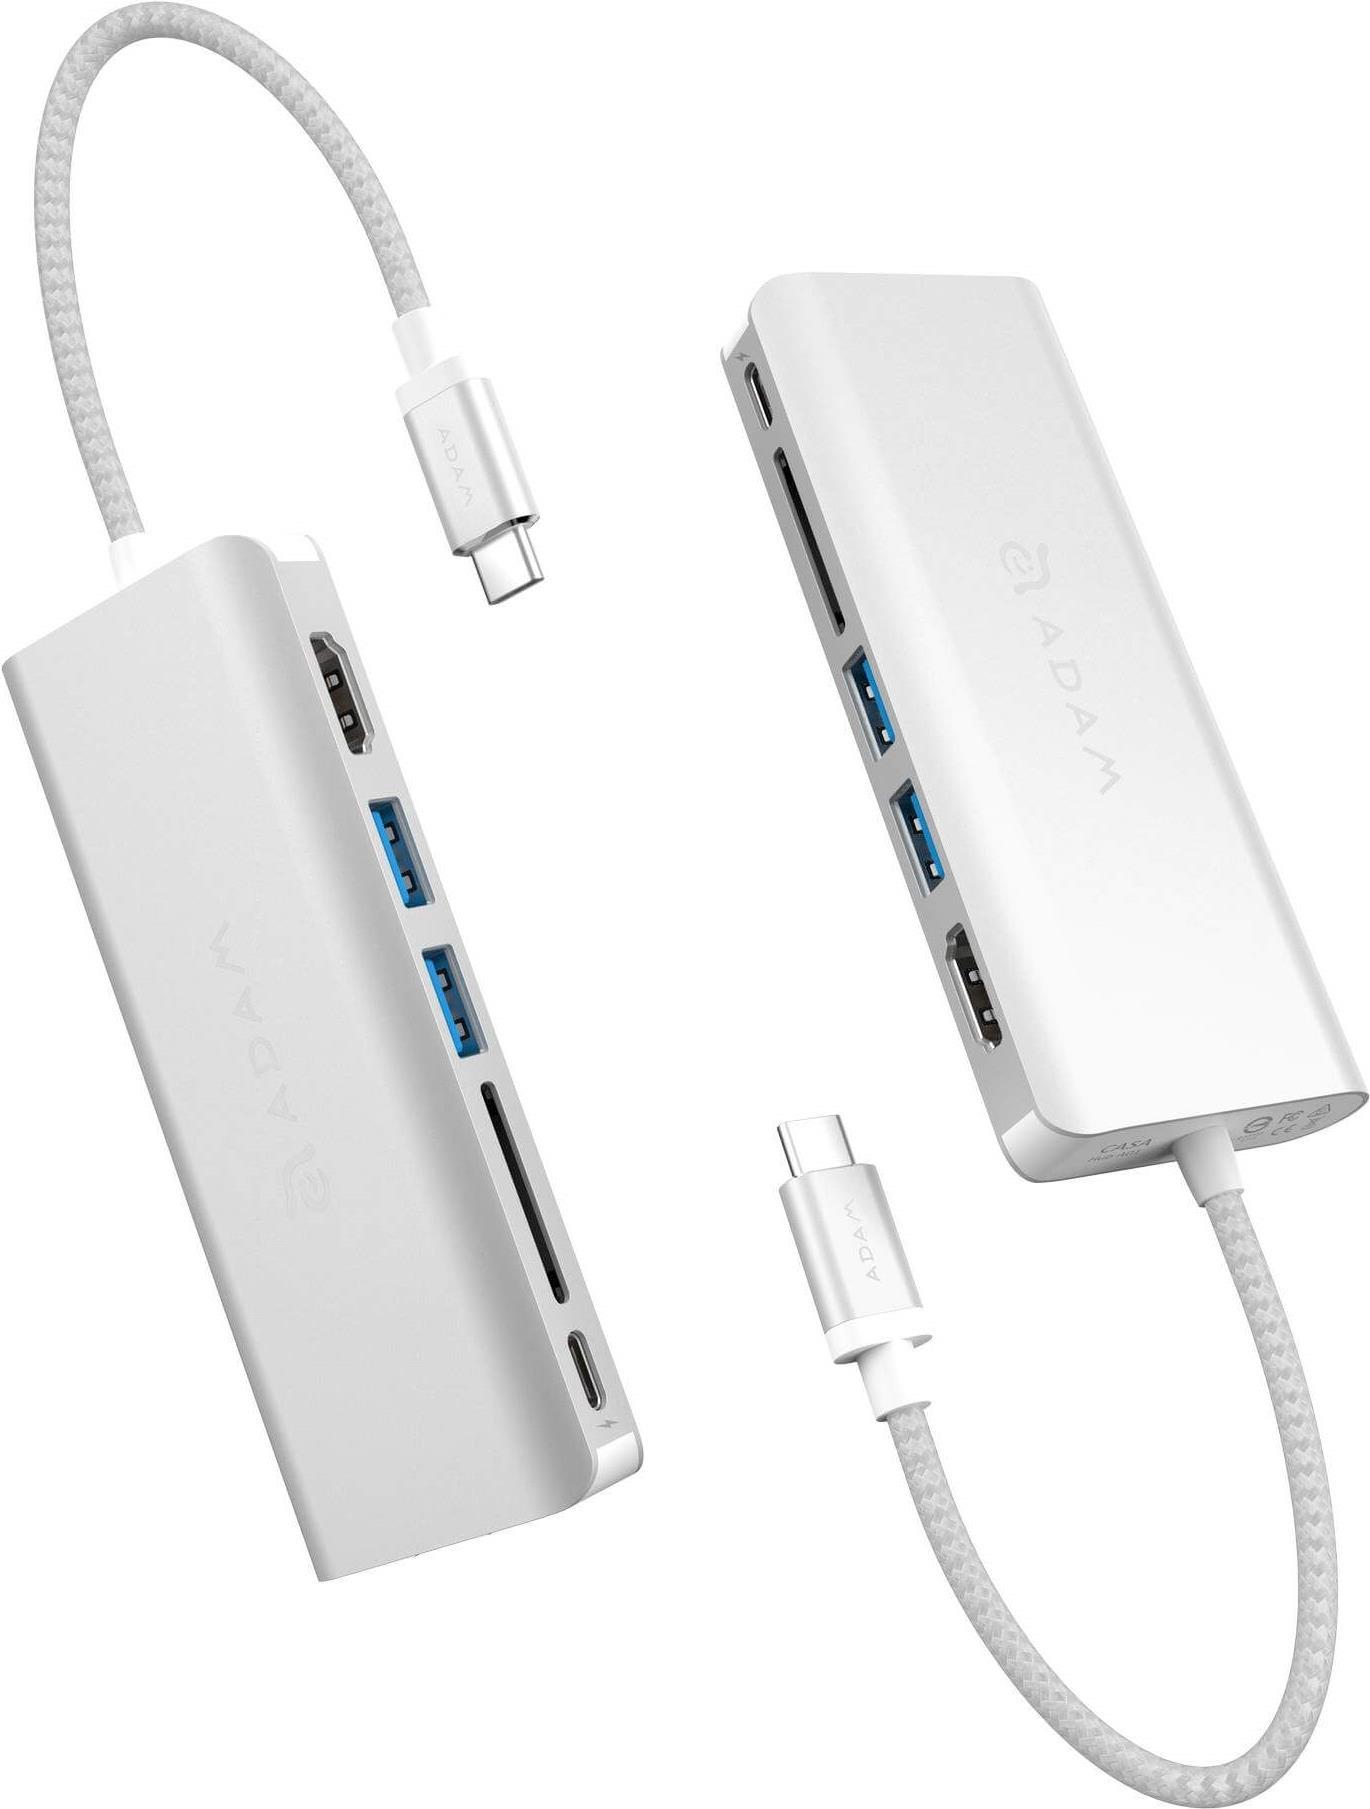 Adam Elements Casa Hub A01 - USB-C HUB Aluminium | 2 USB 3.1 Ports | 1 USB-C 3.1 Port | SD/SDHC Kartenleser | 1 HDMI Port mit 4K-Video Unterstützung | 1 RJ45 Ethernet Port (Gigabit) | Macbook, Macbook Pro, Type-C Phones | Silber